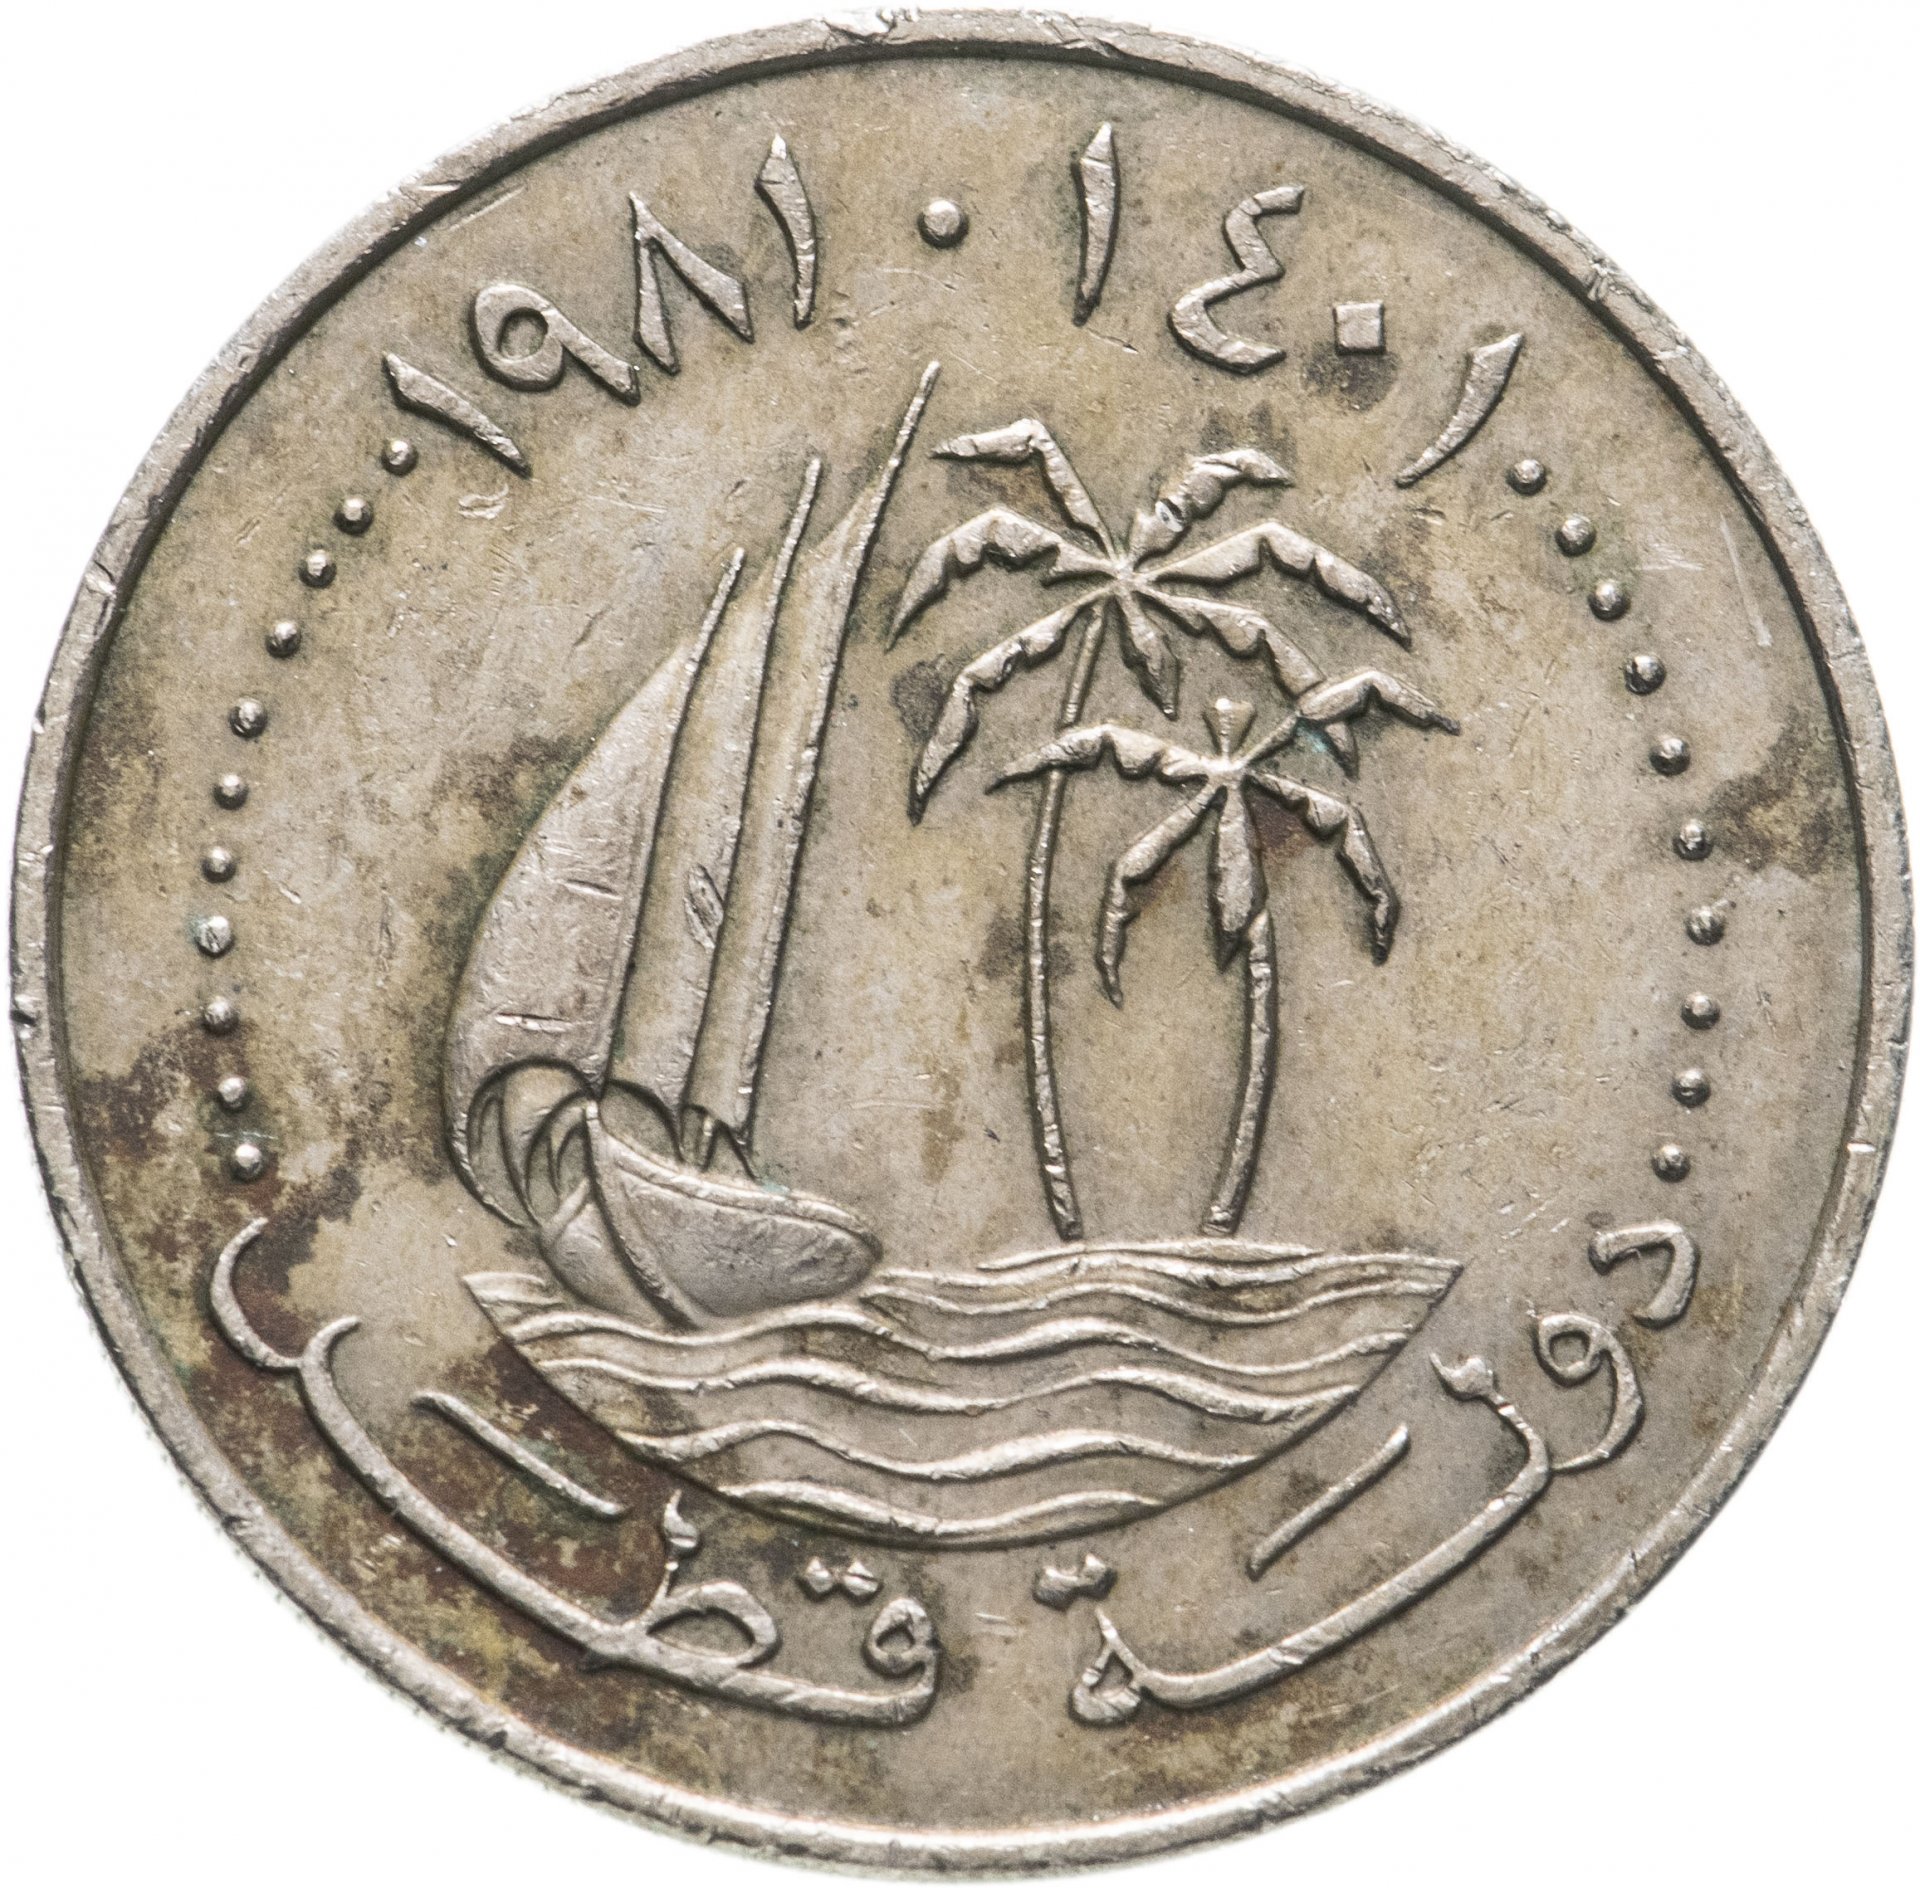 17 дирхам. Арабские монеты. Монеты Катара. Дирхамы монеты. Арабская монета 50.